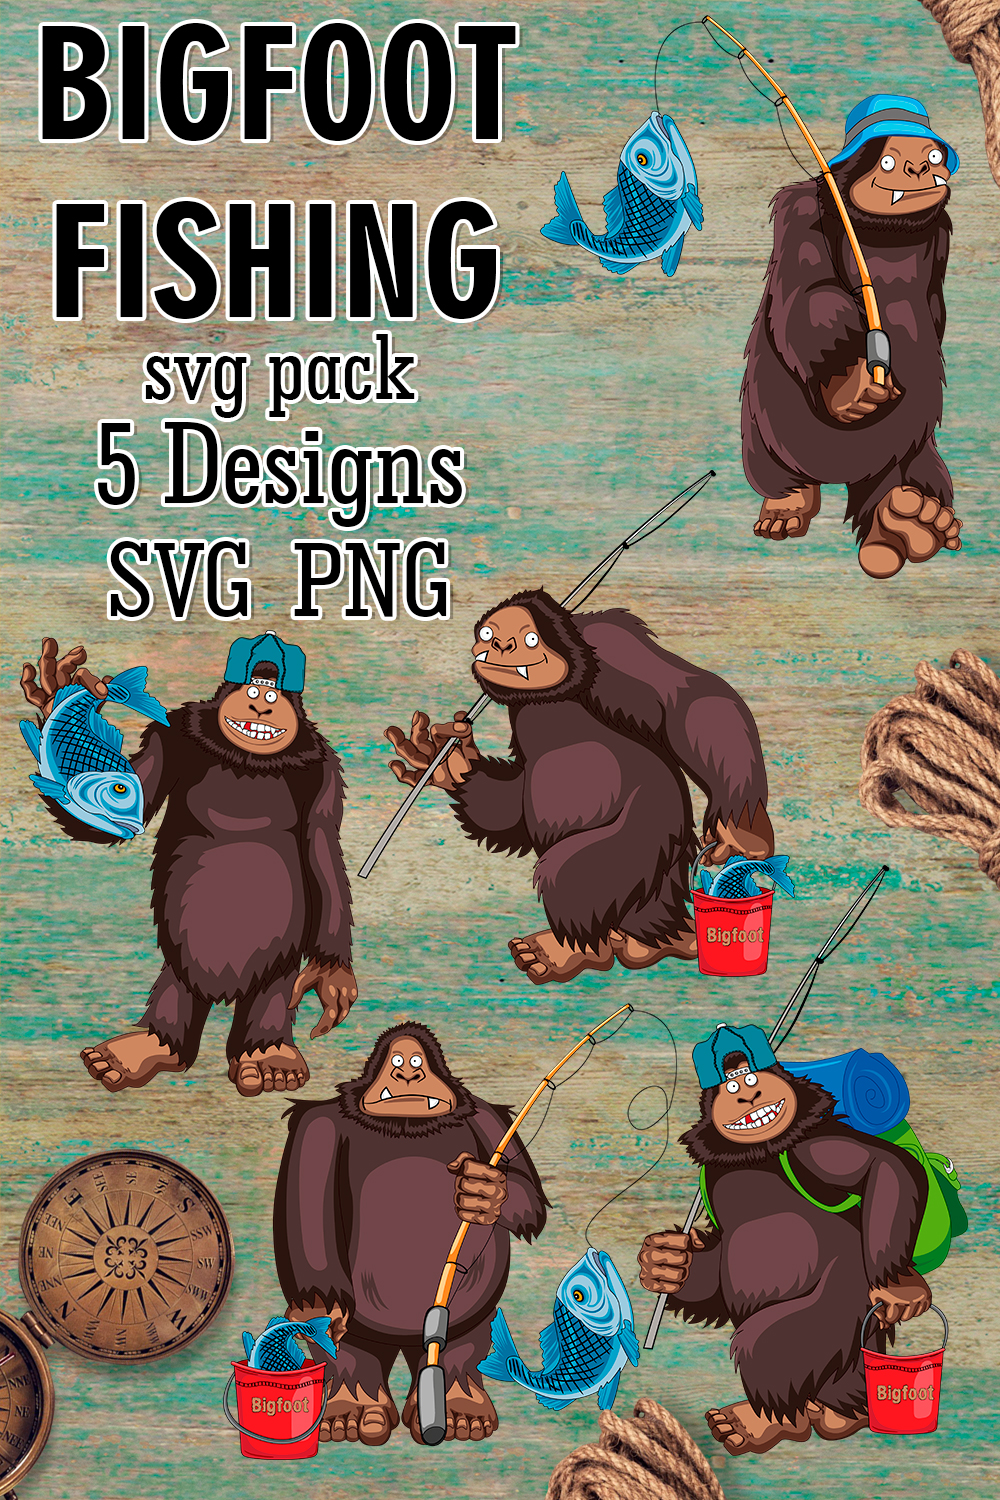 Bigfoot Fishing Svg - Pinterest.